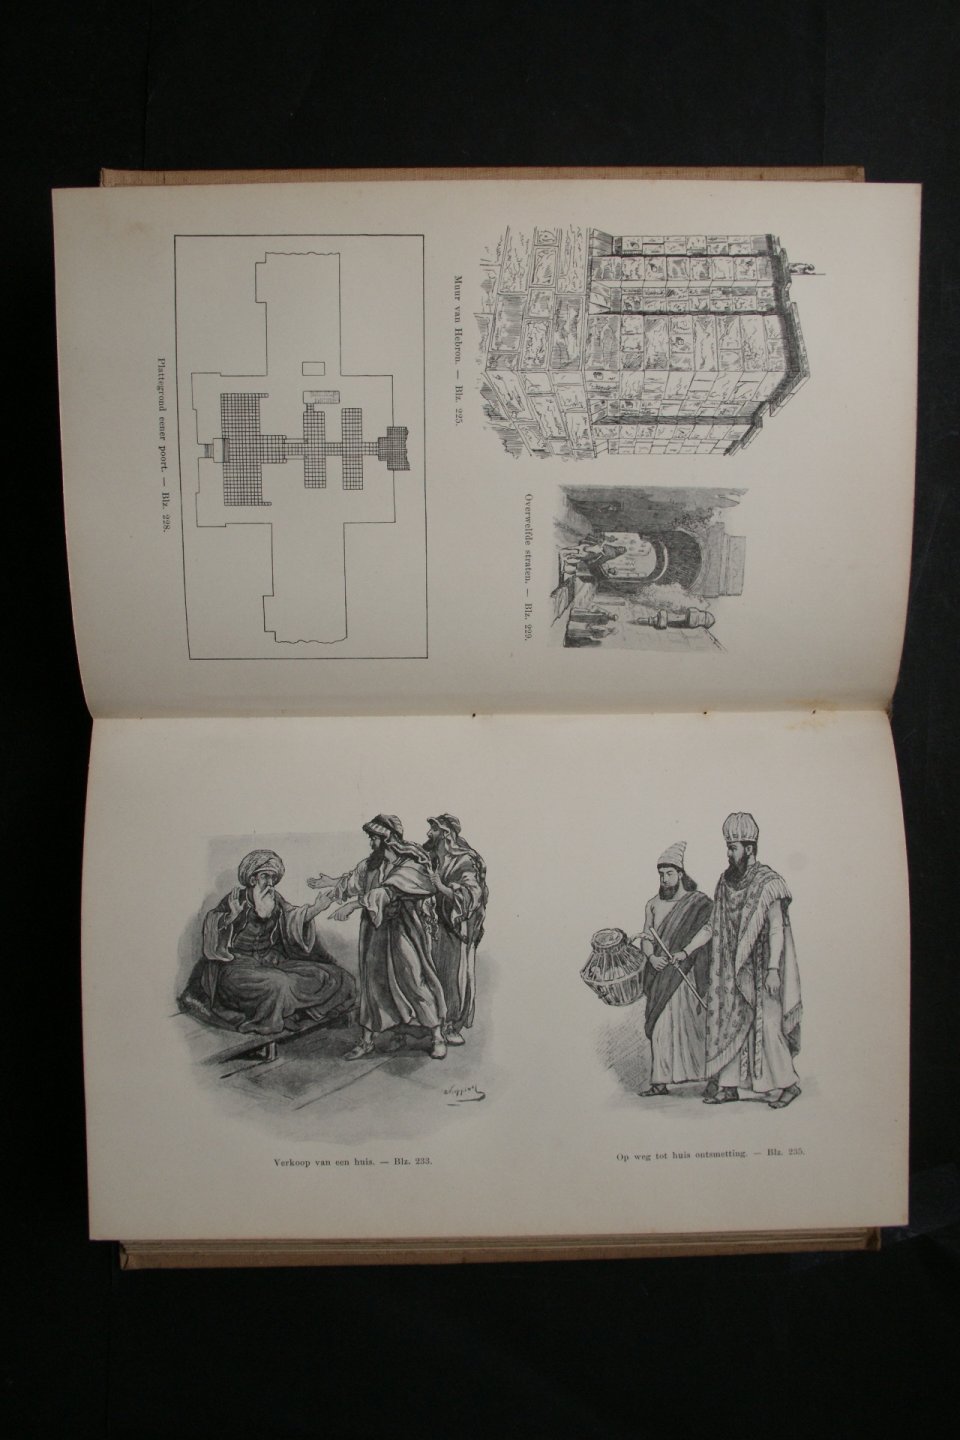 Feringa, J.H.; Koppenol, Chr. - Gods Kinderen Van Ur met illustraties van Chr. Koppenol